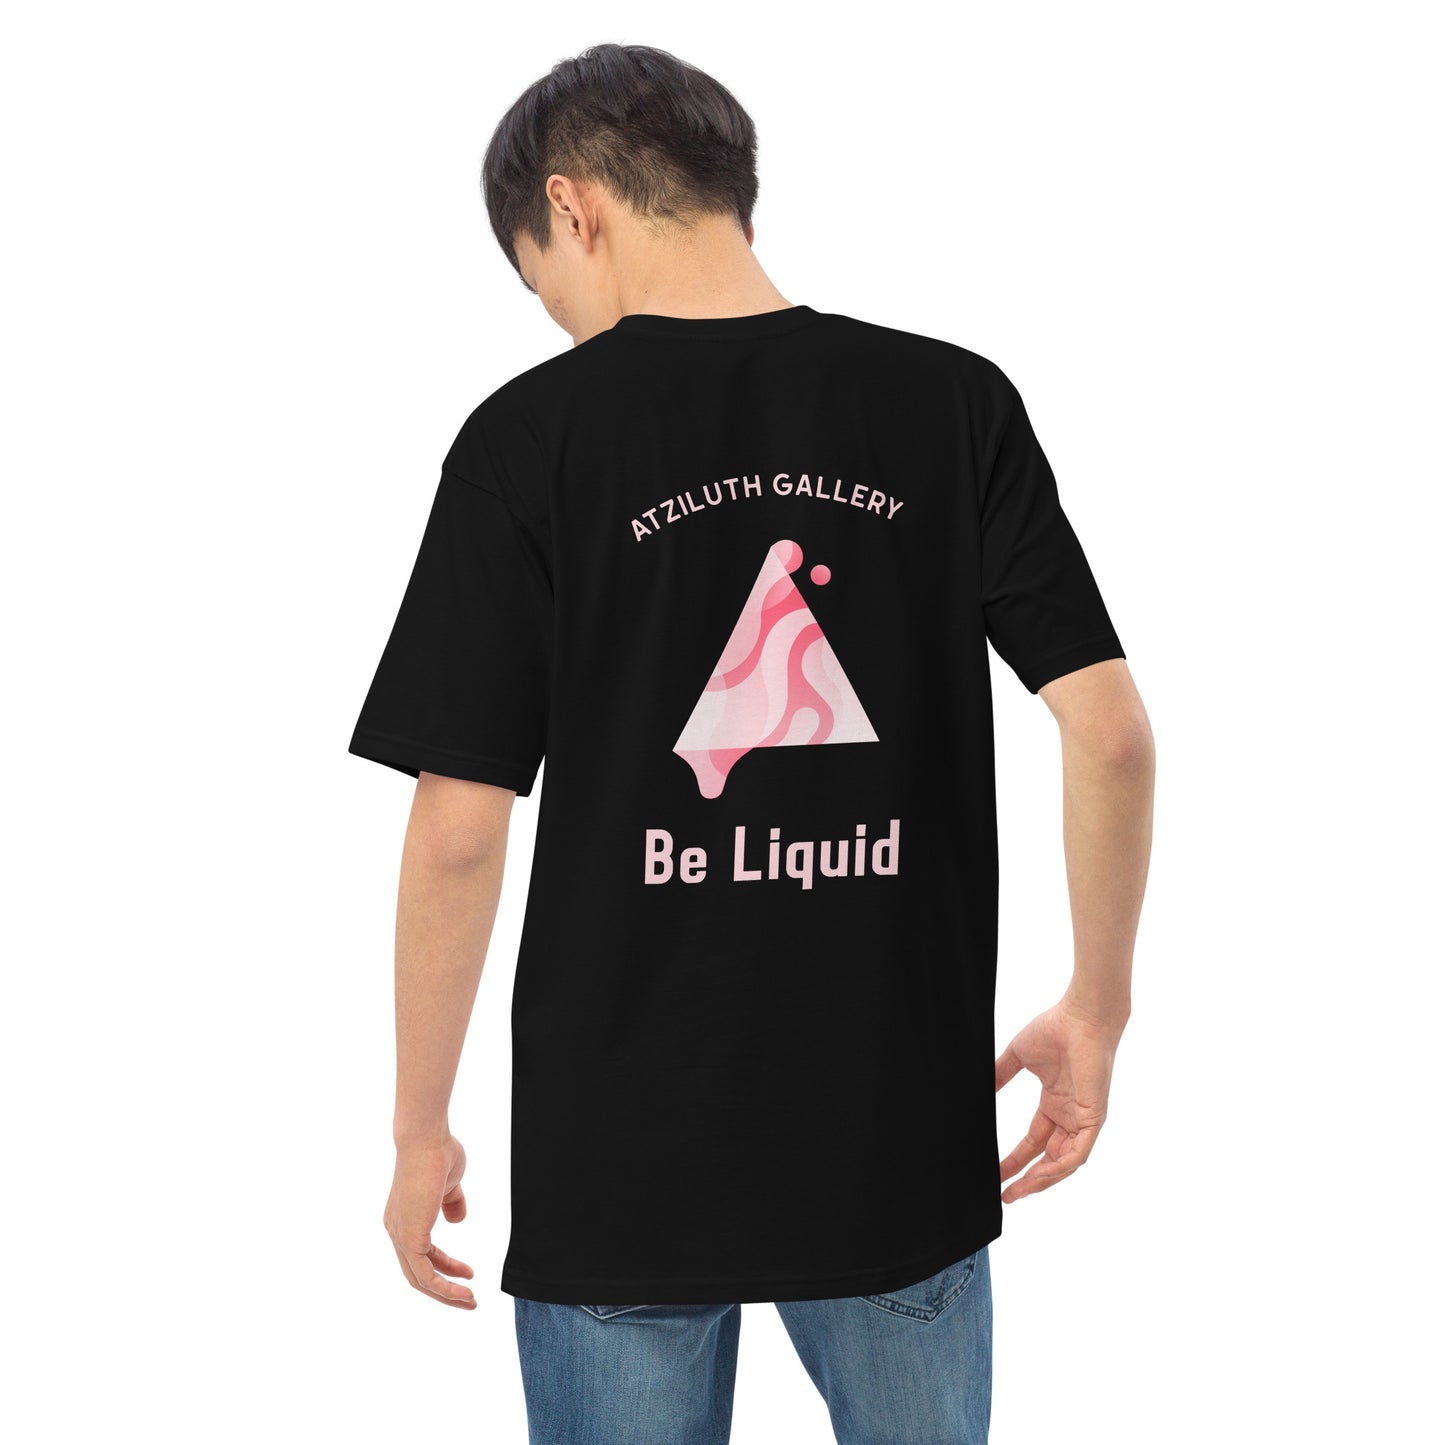 Atziluth Gallery "Be Liquid" Men’s premium heavyweight tee